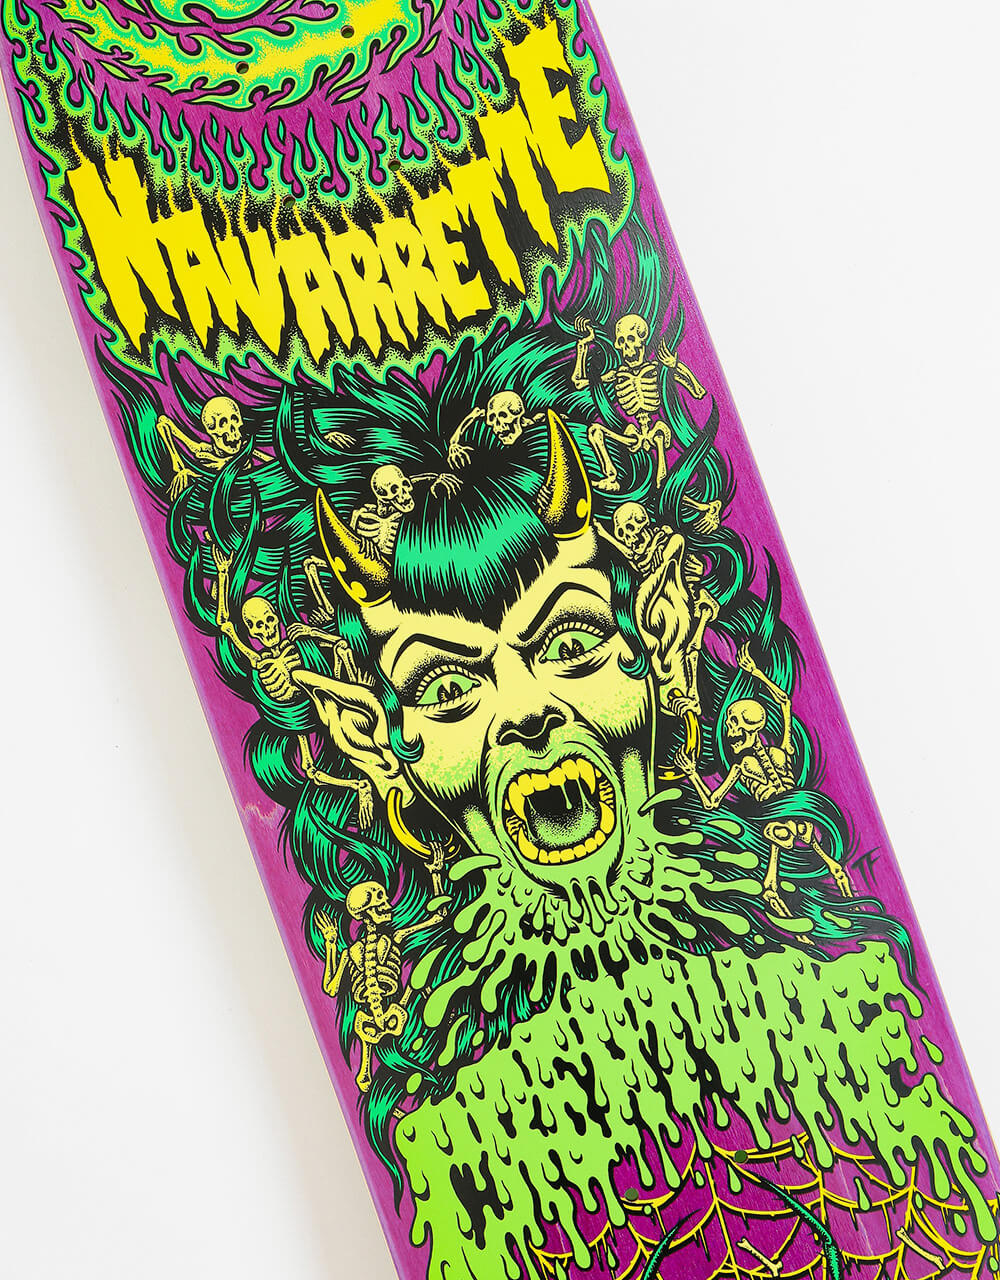 Creature Navarrette Hell Queen Skateboard Deck - 8.8"